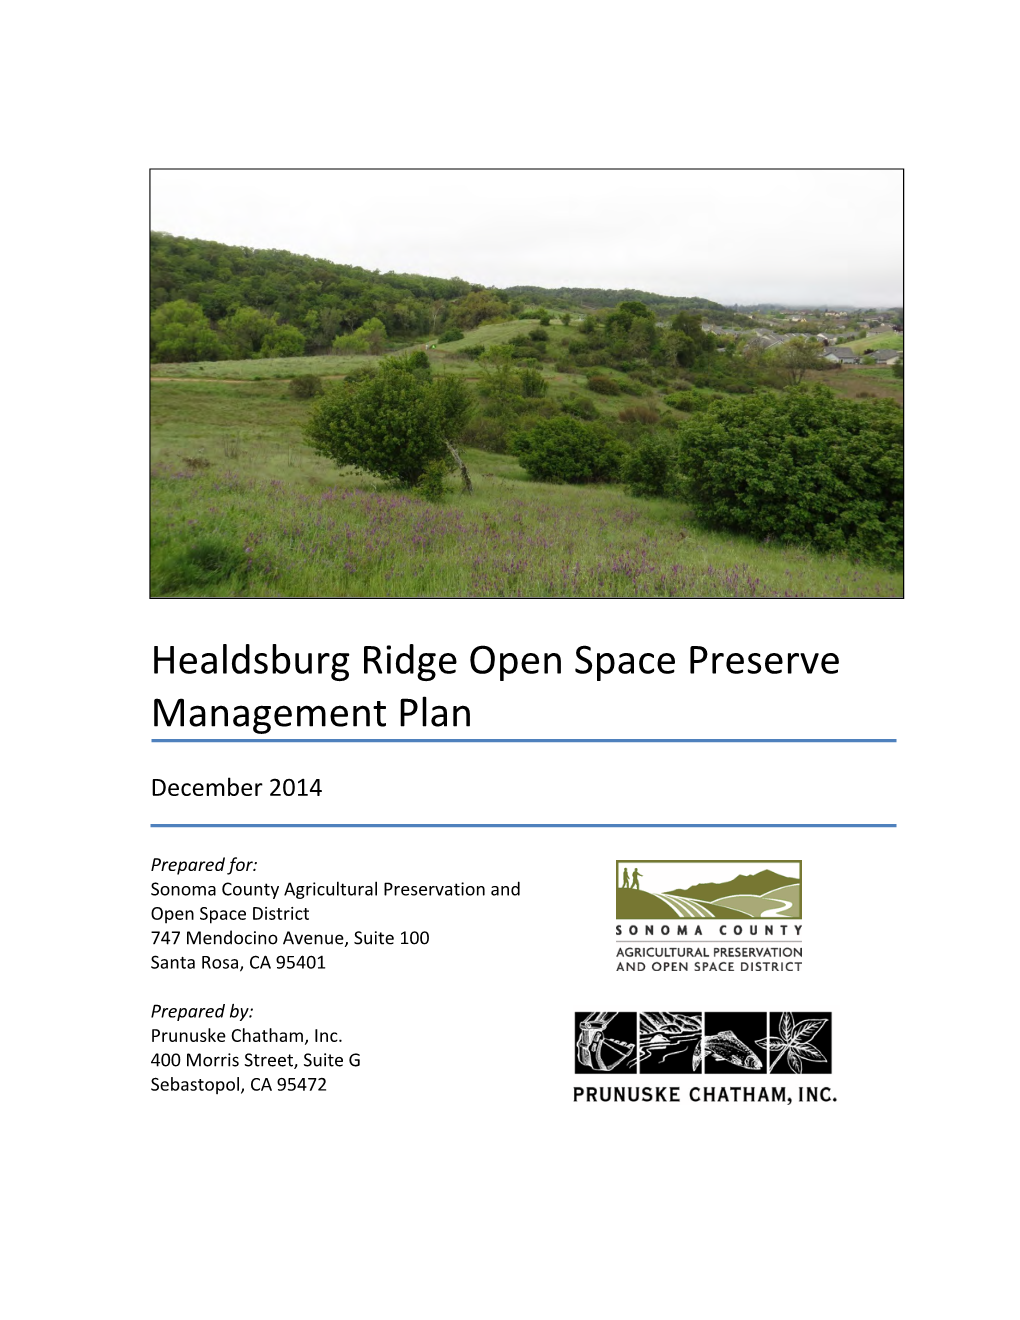 Healdsburg Ridge Open Space Preserve Management Plan